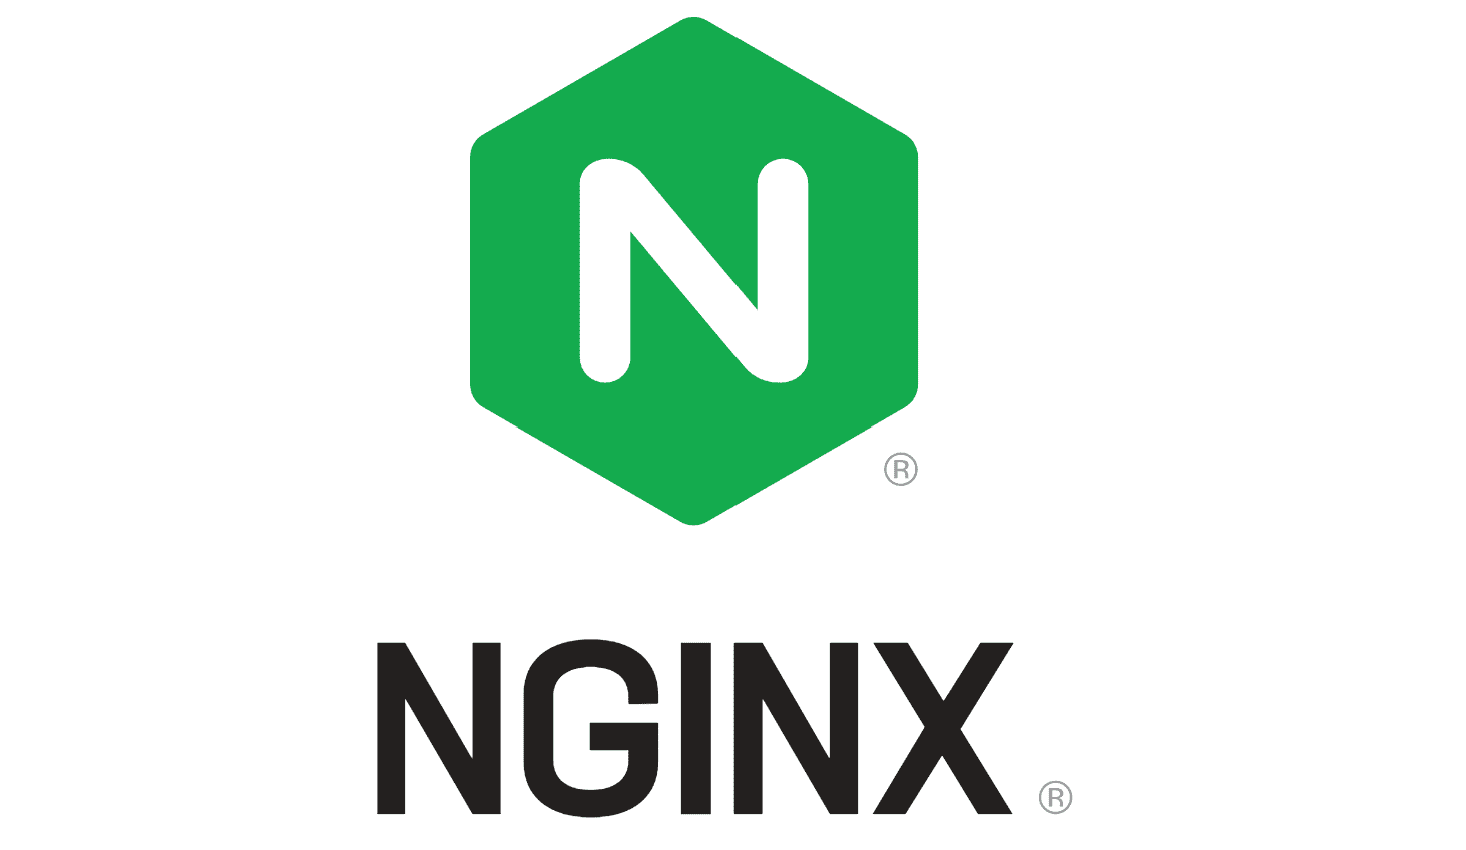 NGINX Vulnerability